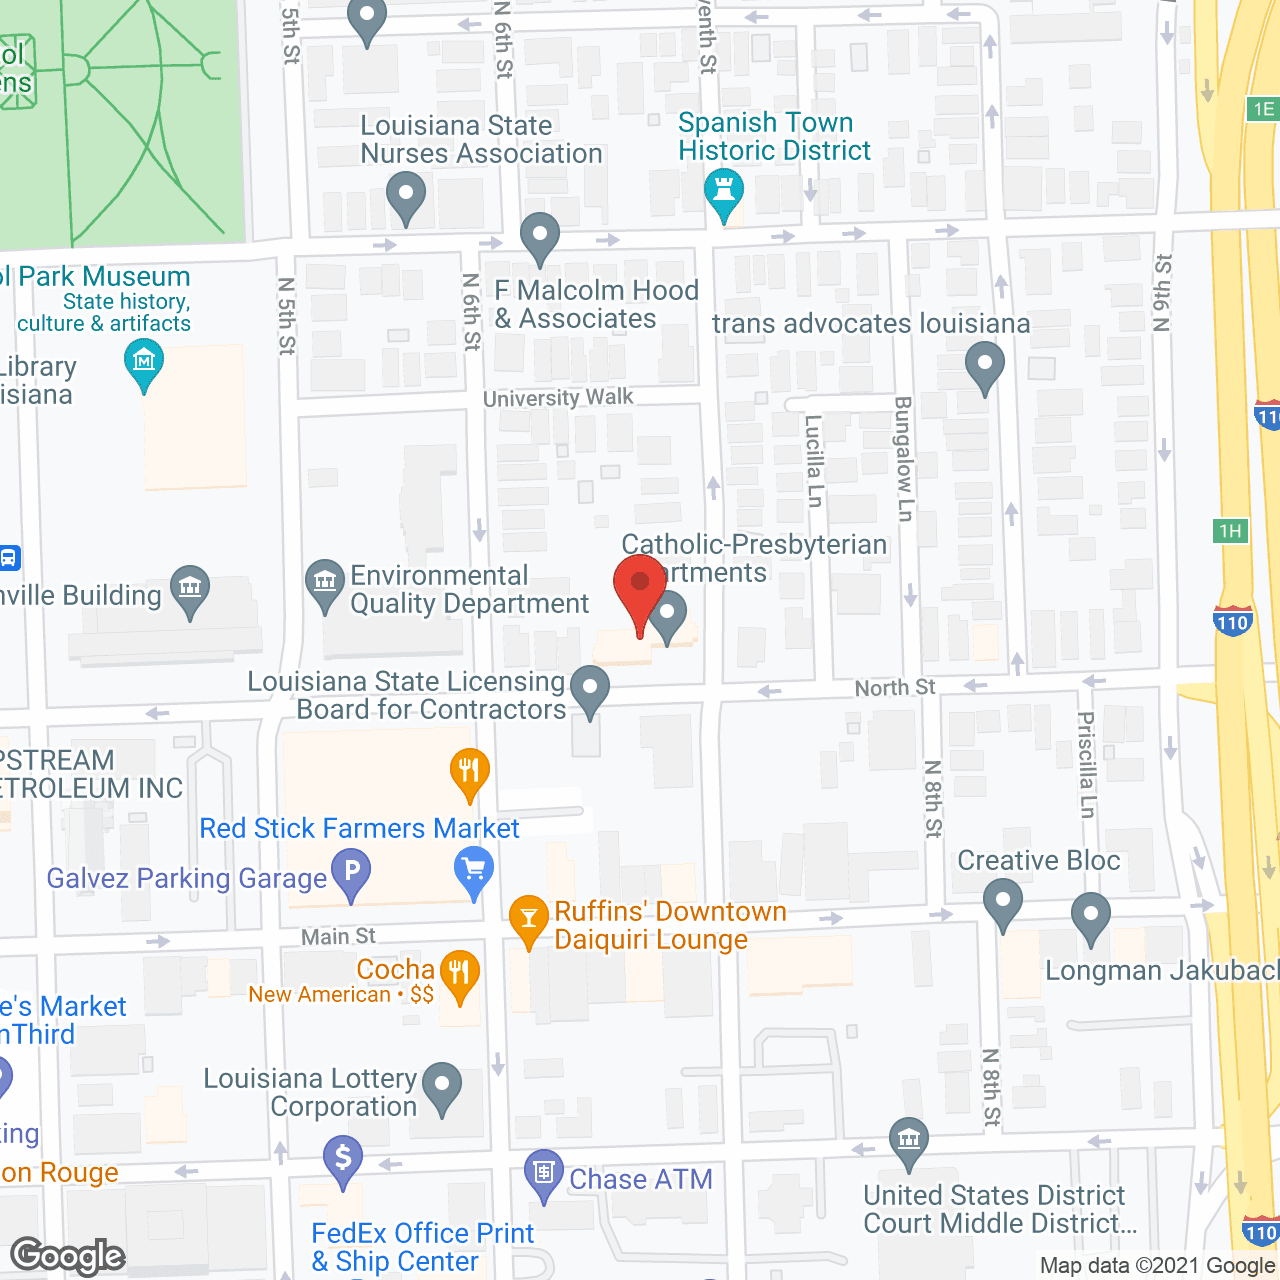 Catholic-Presbyterian Apt in google map